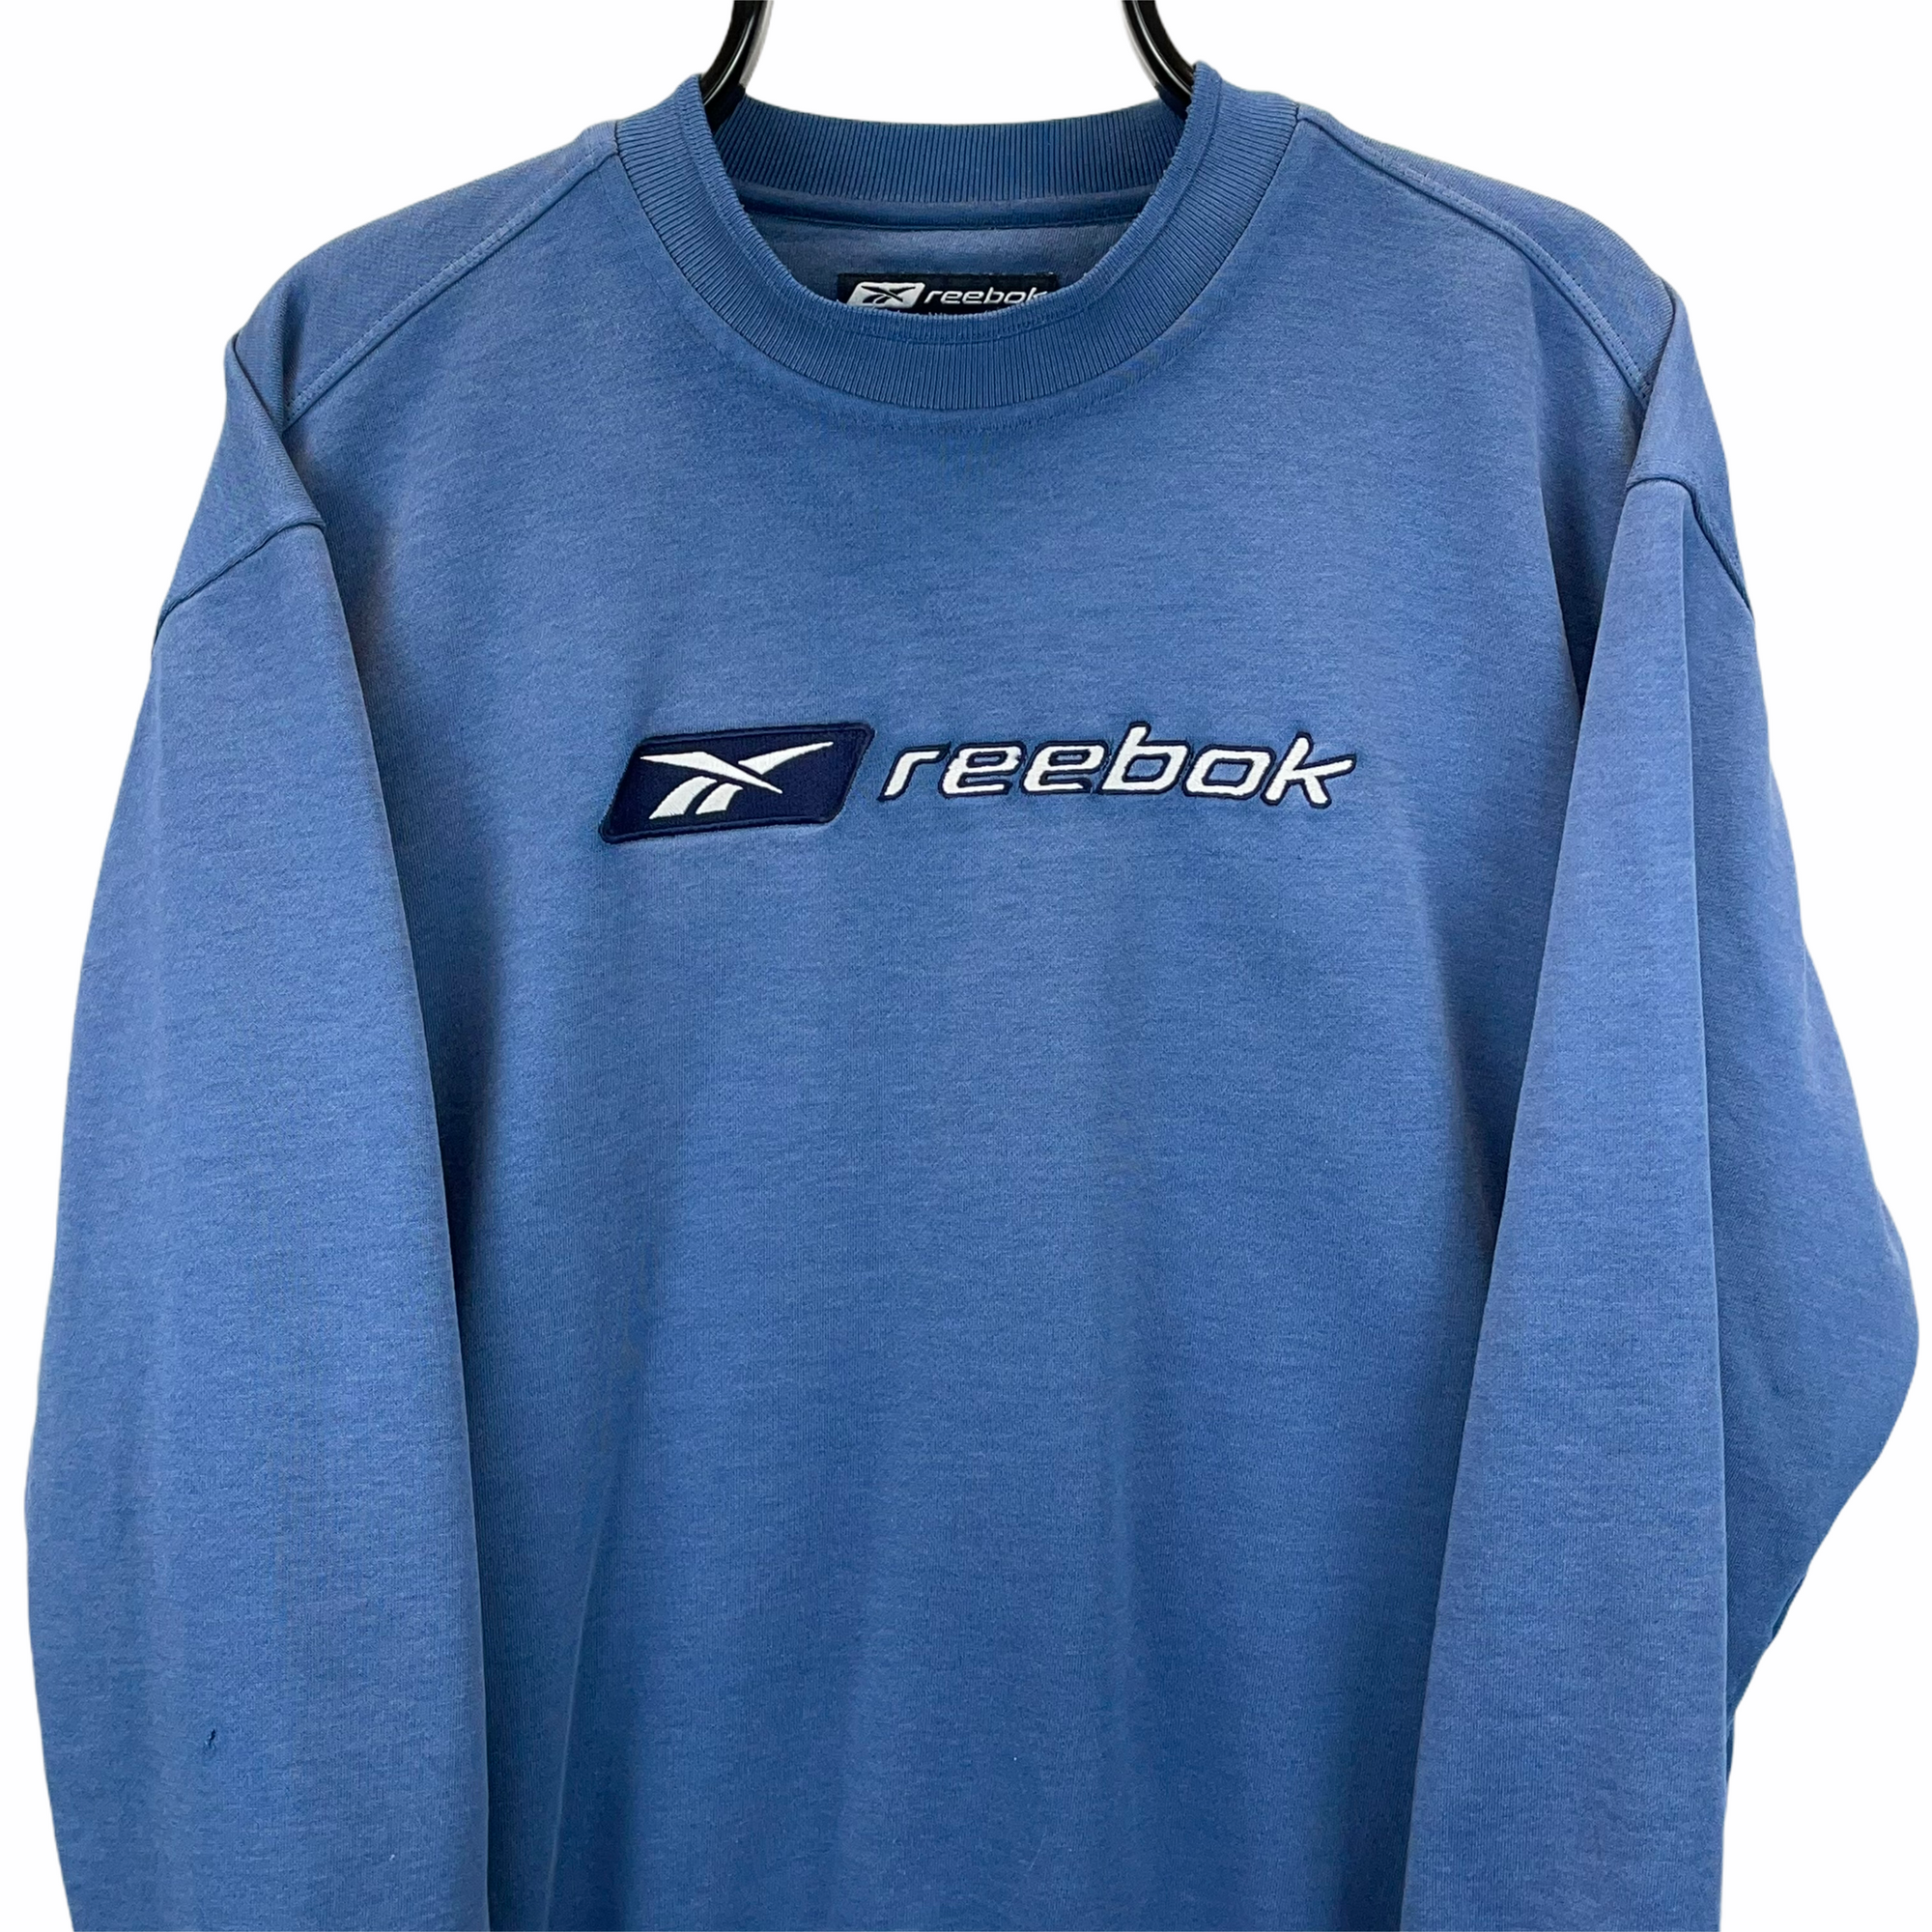 Vintage 90s Reebok Spellout Sweatshirt in Blue - Men's Medium/Women's Large